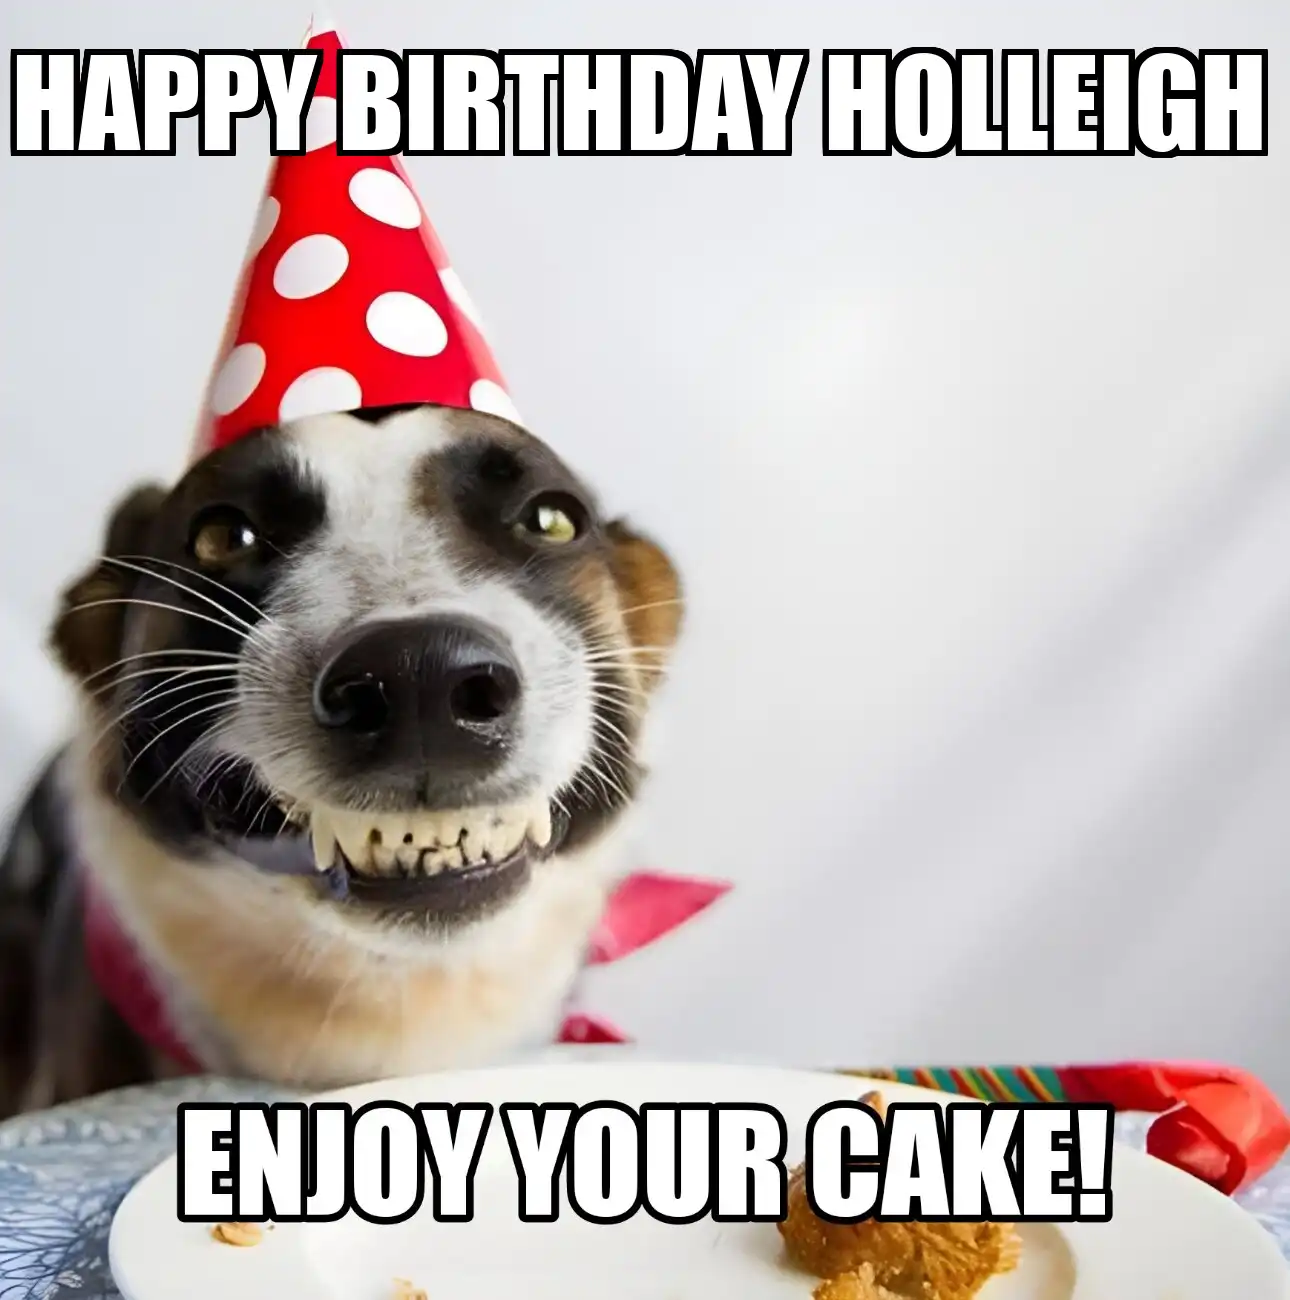 Happy Birthday Holleigh Enjoy Your Cake Dog Meme